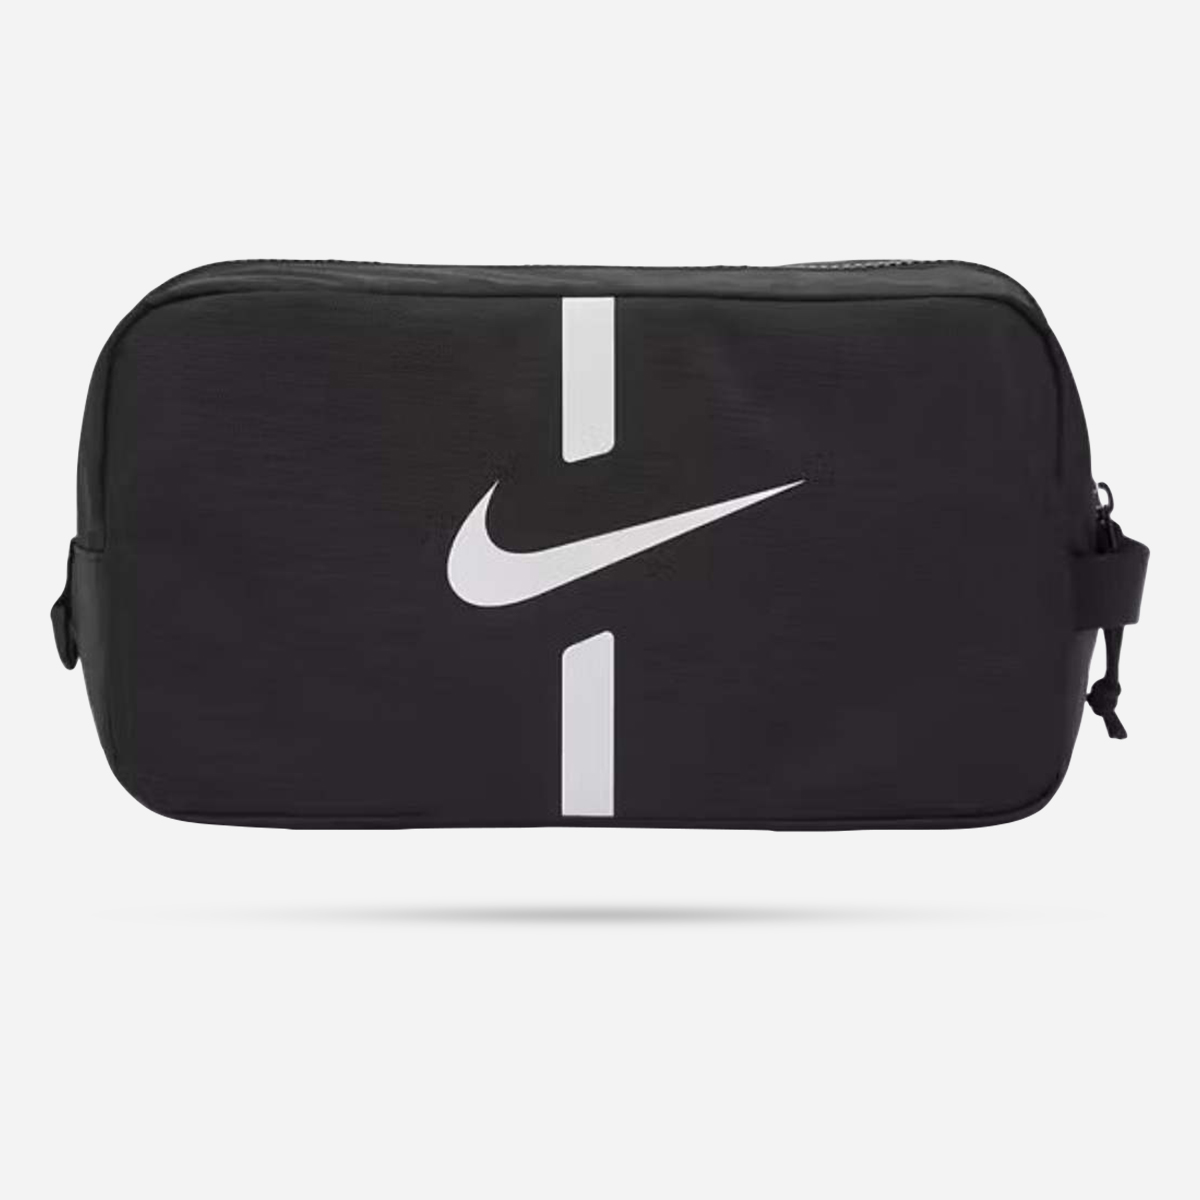 AN302512 Nike Academy Soccer Shoe Bag